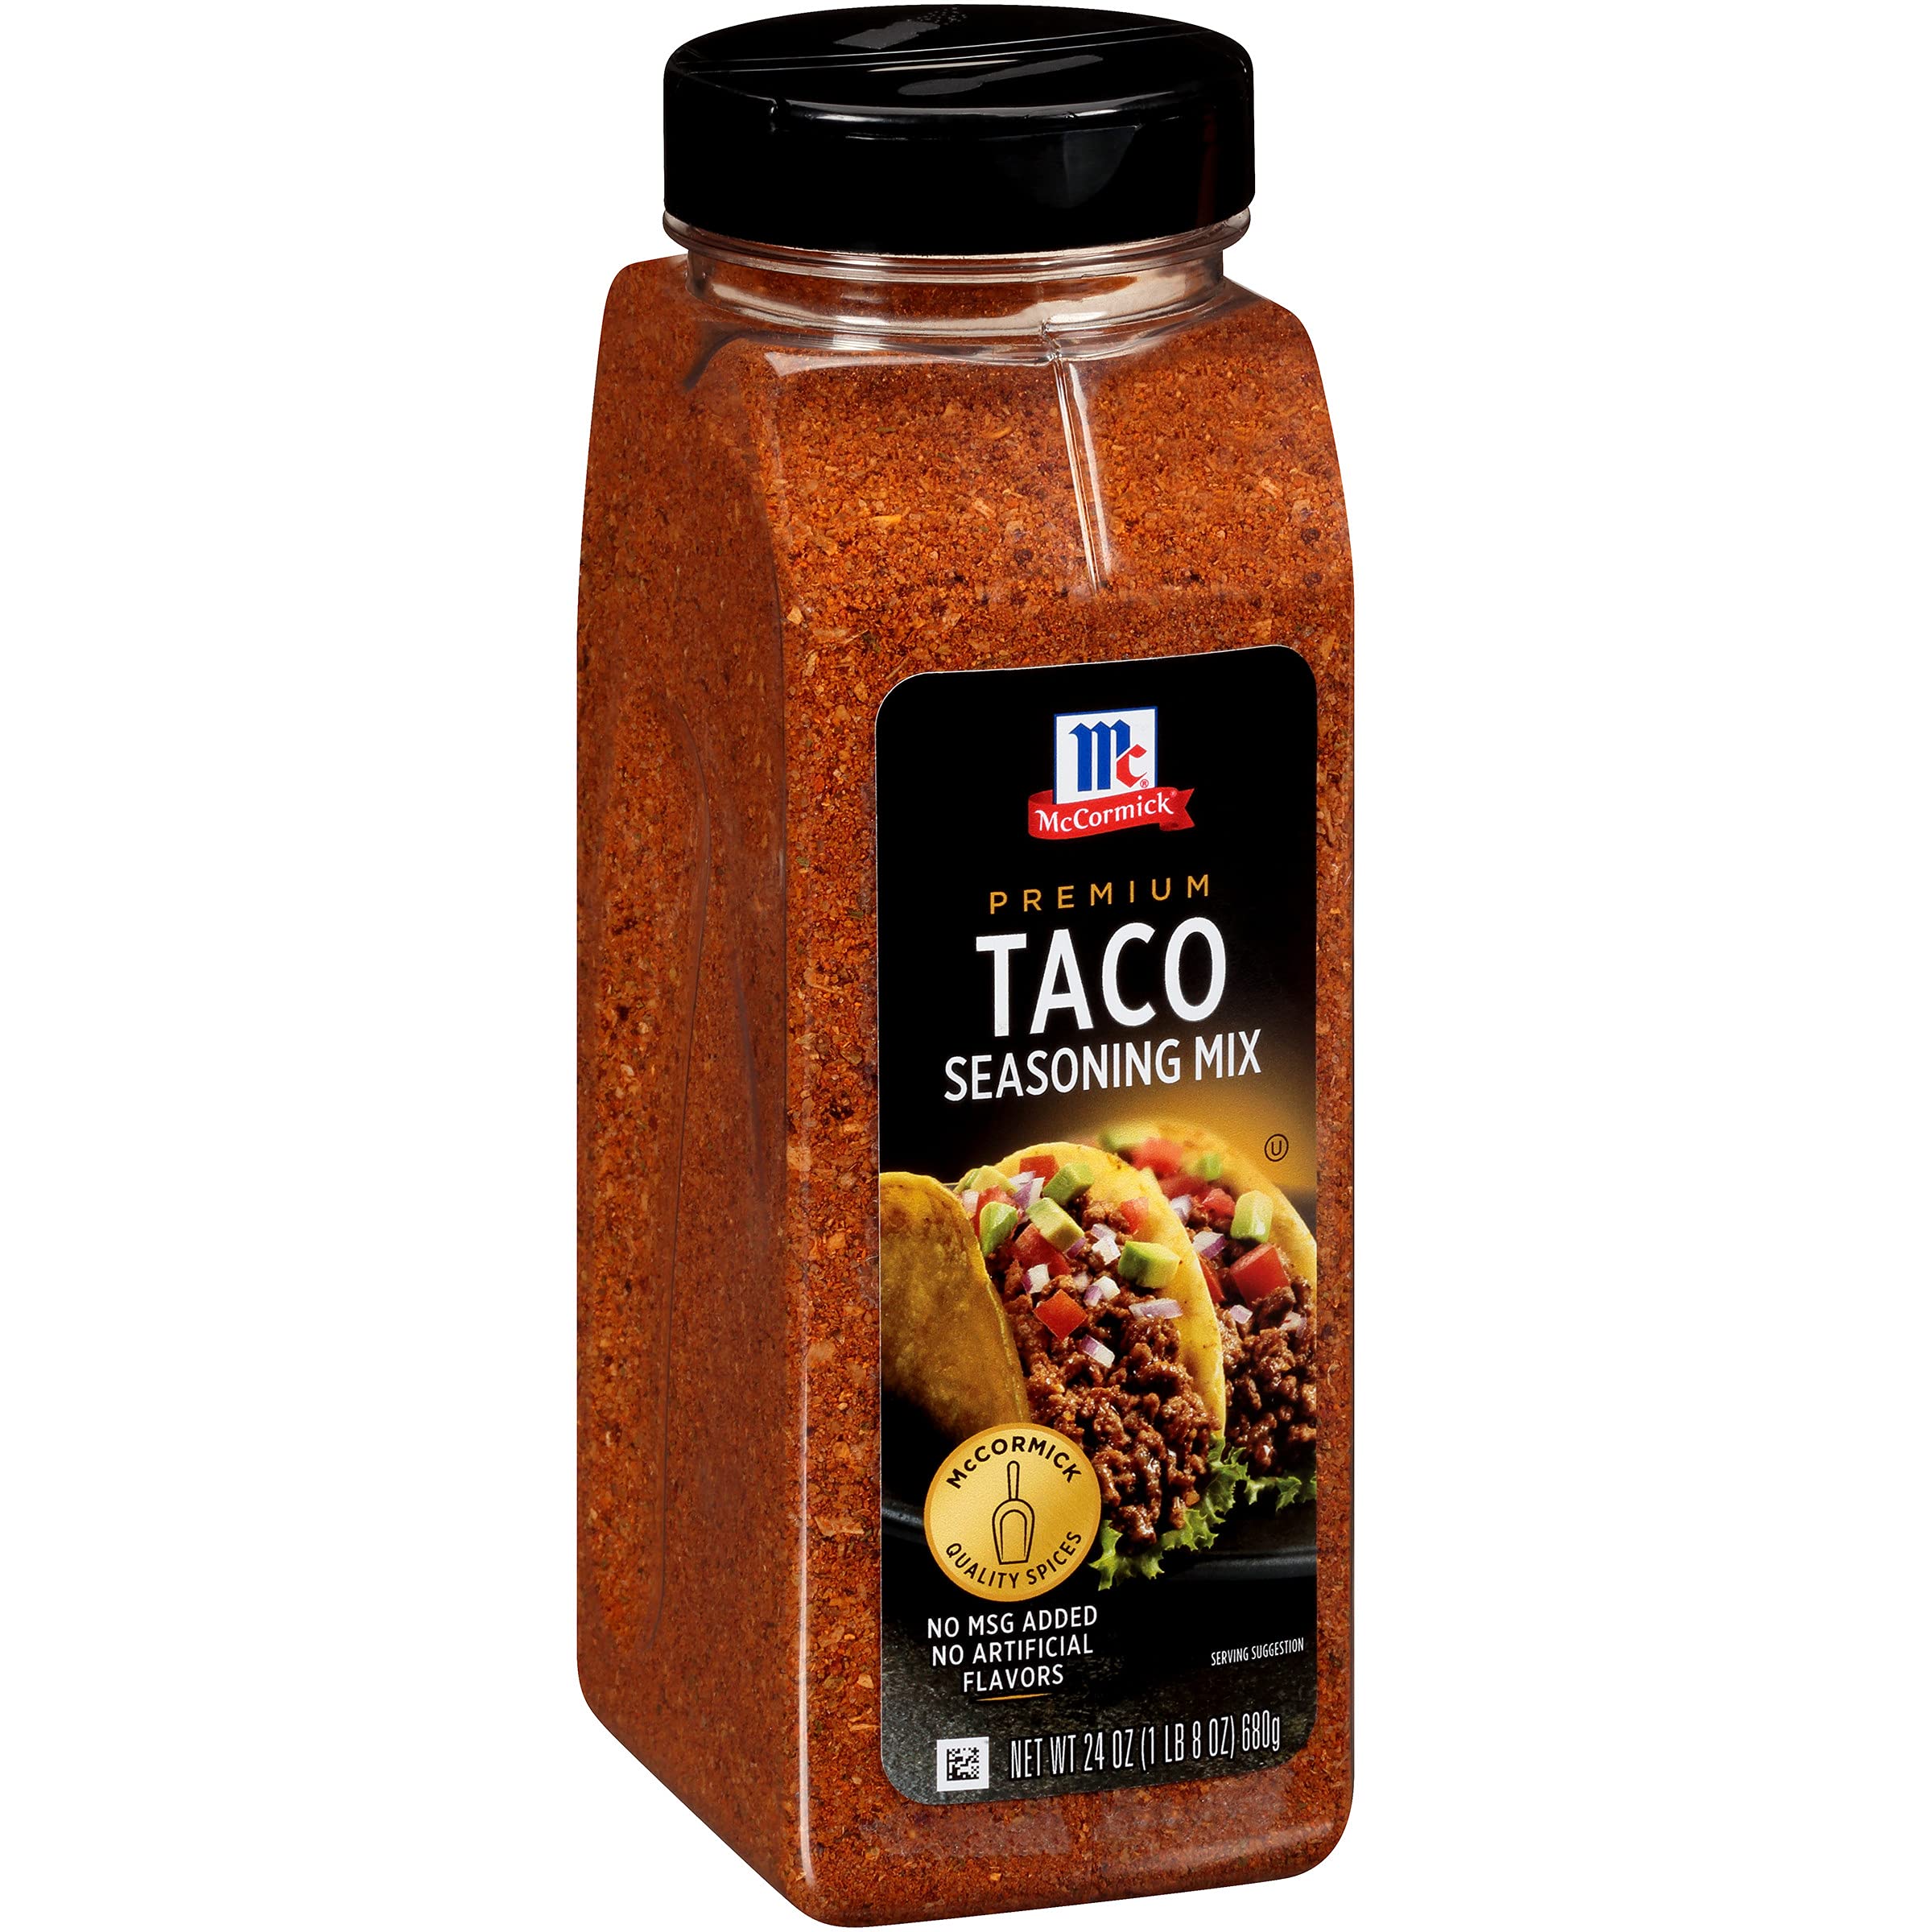 24-Oz McCormick Premium Taco Seasoning Mix $5.92 w/ S&S + Free Shipping w/ Prime or on Orders $35+